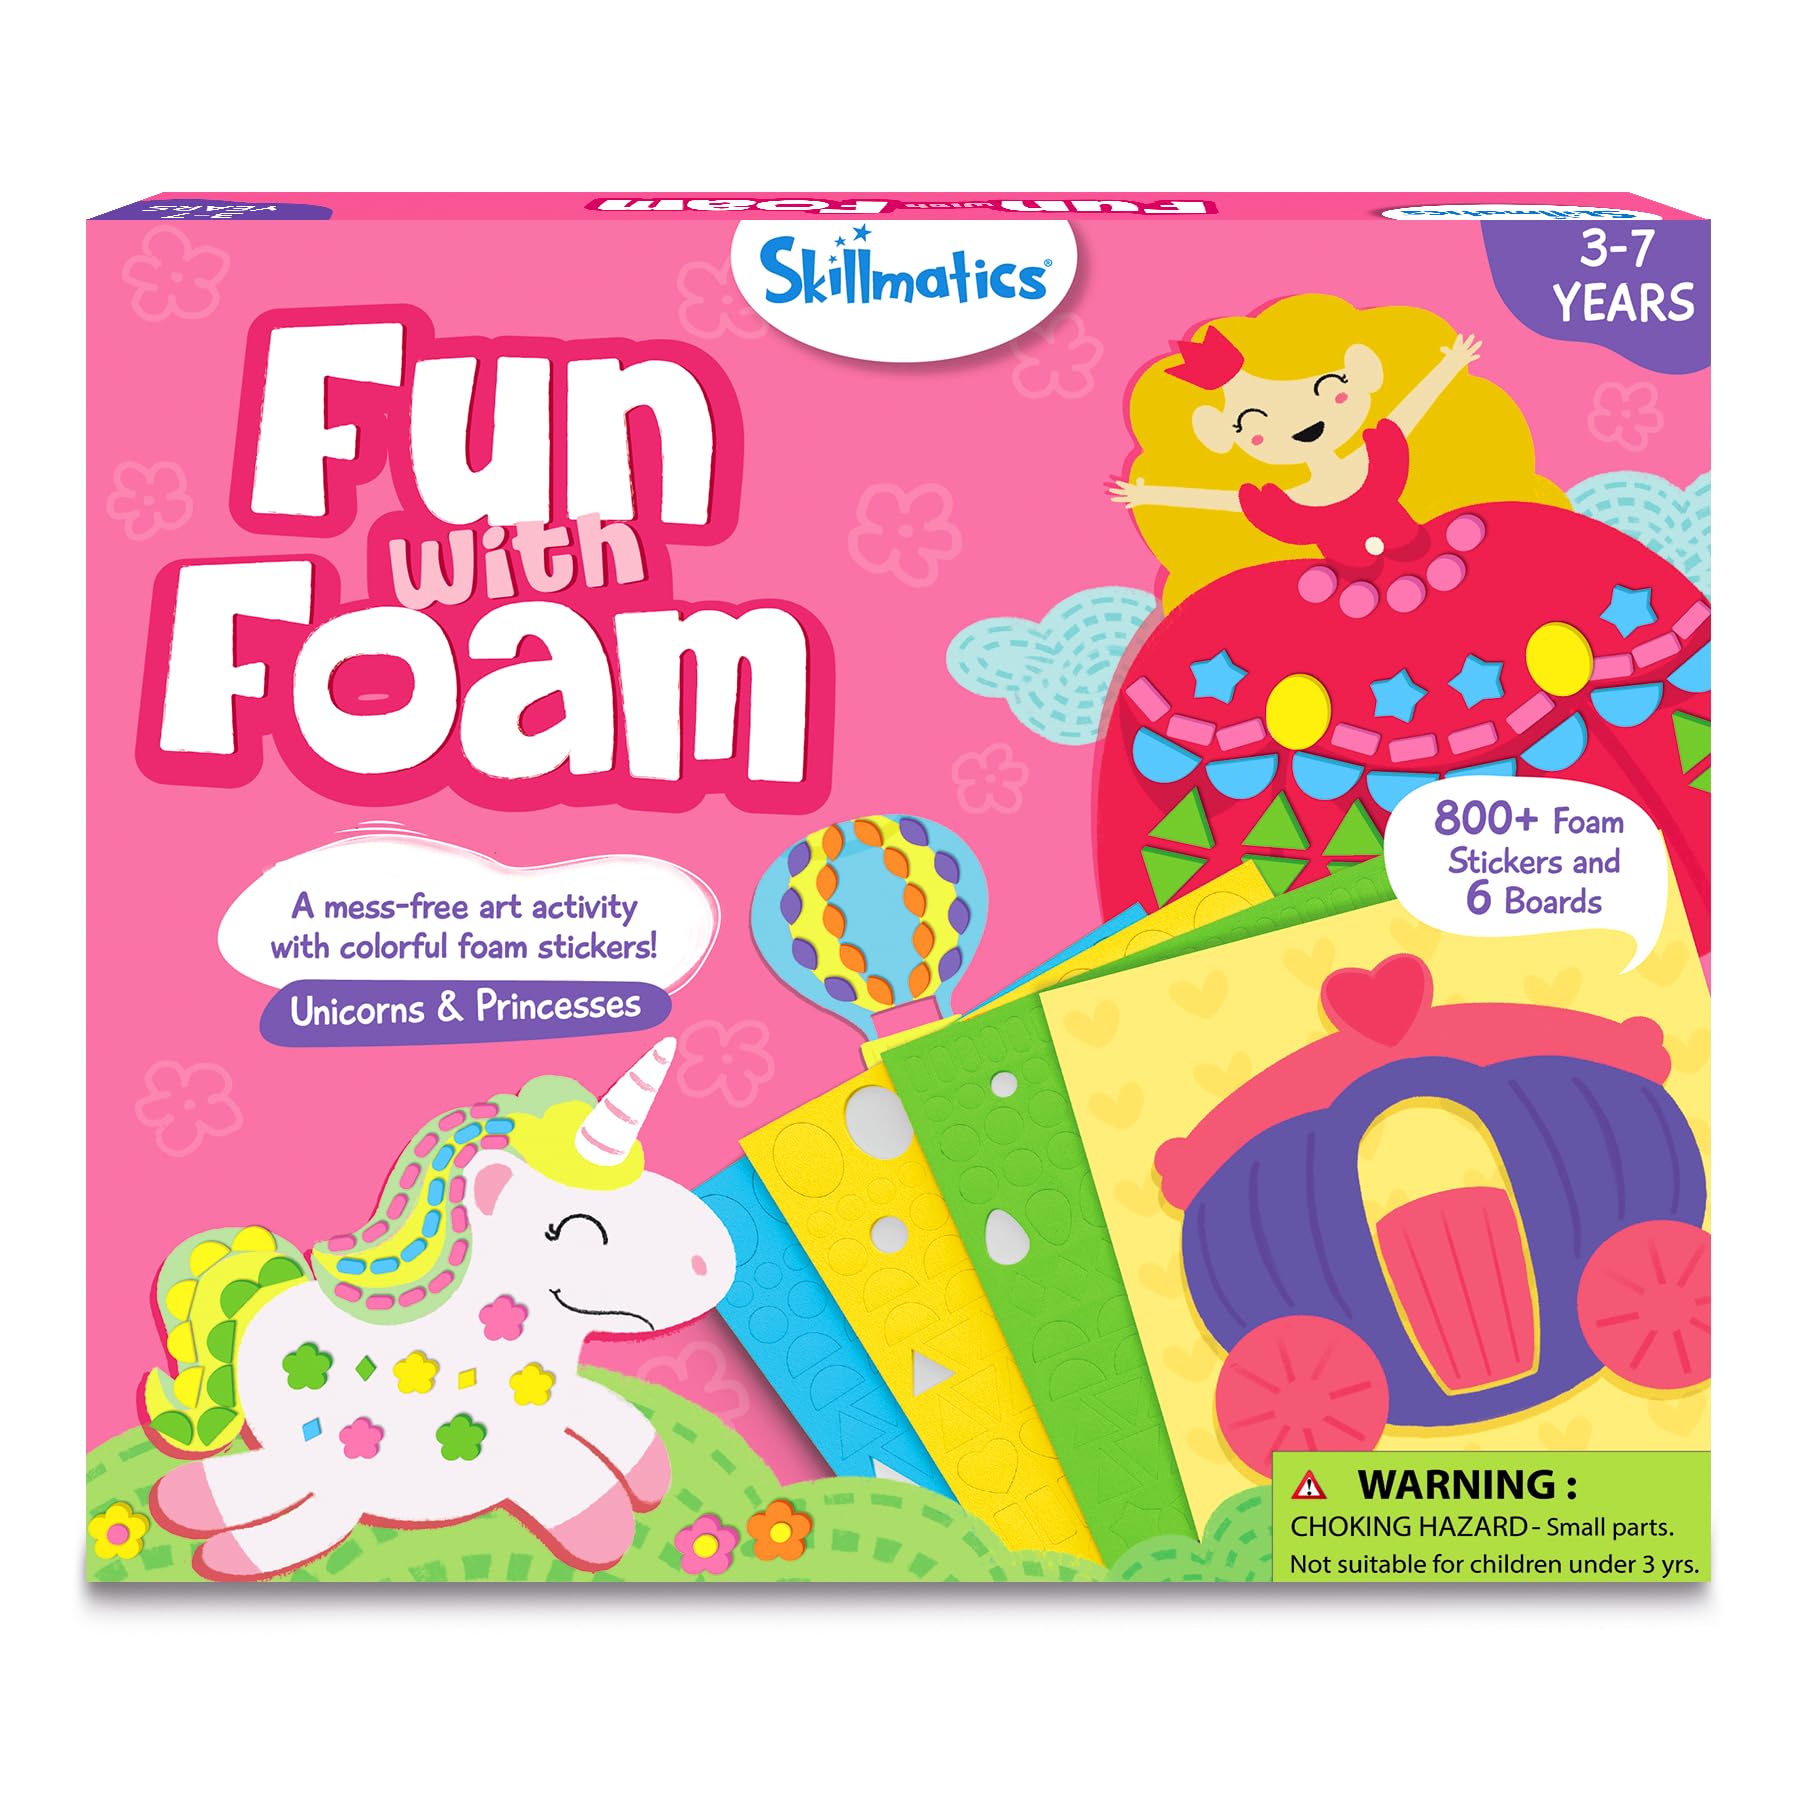 Skillmatics Dot It & Fun with Foam Unicorns & Princesses Theme Bundle, Art & Craft Kits, DIY Activities for Kids